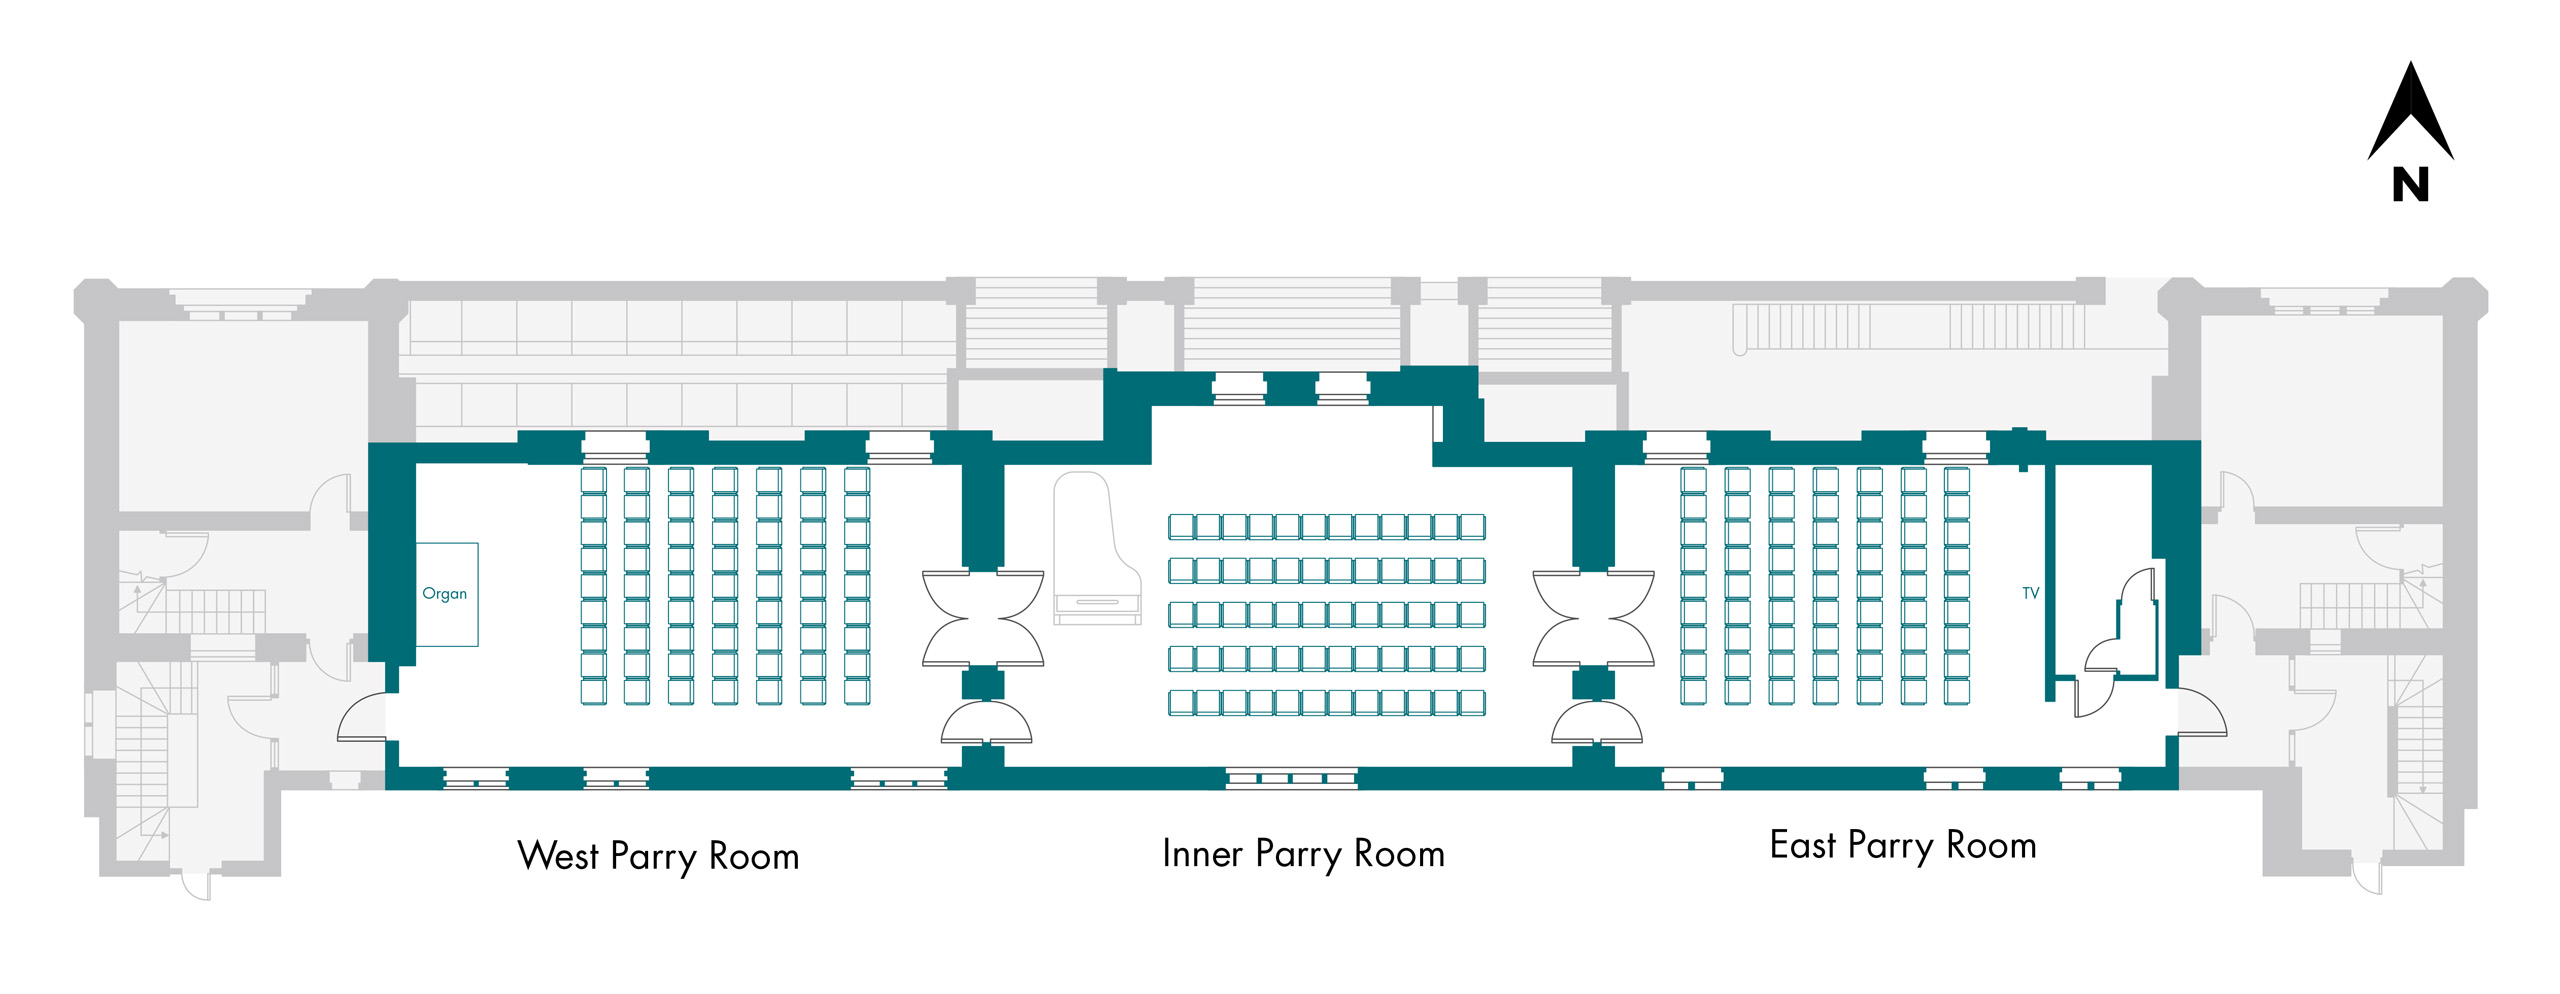 Parry Rooms Theatre Style RCM